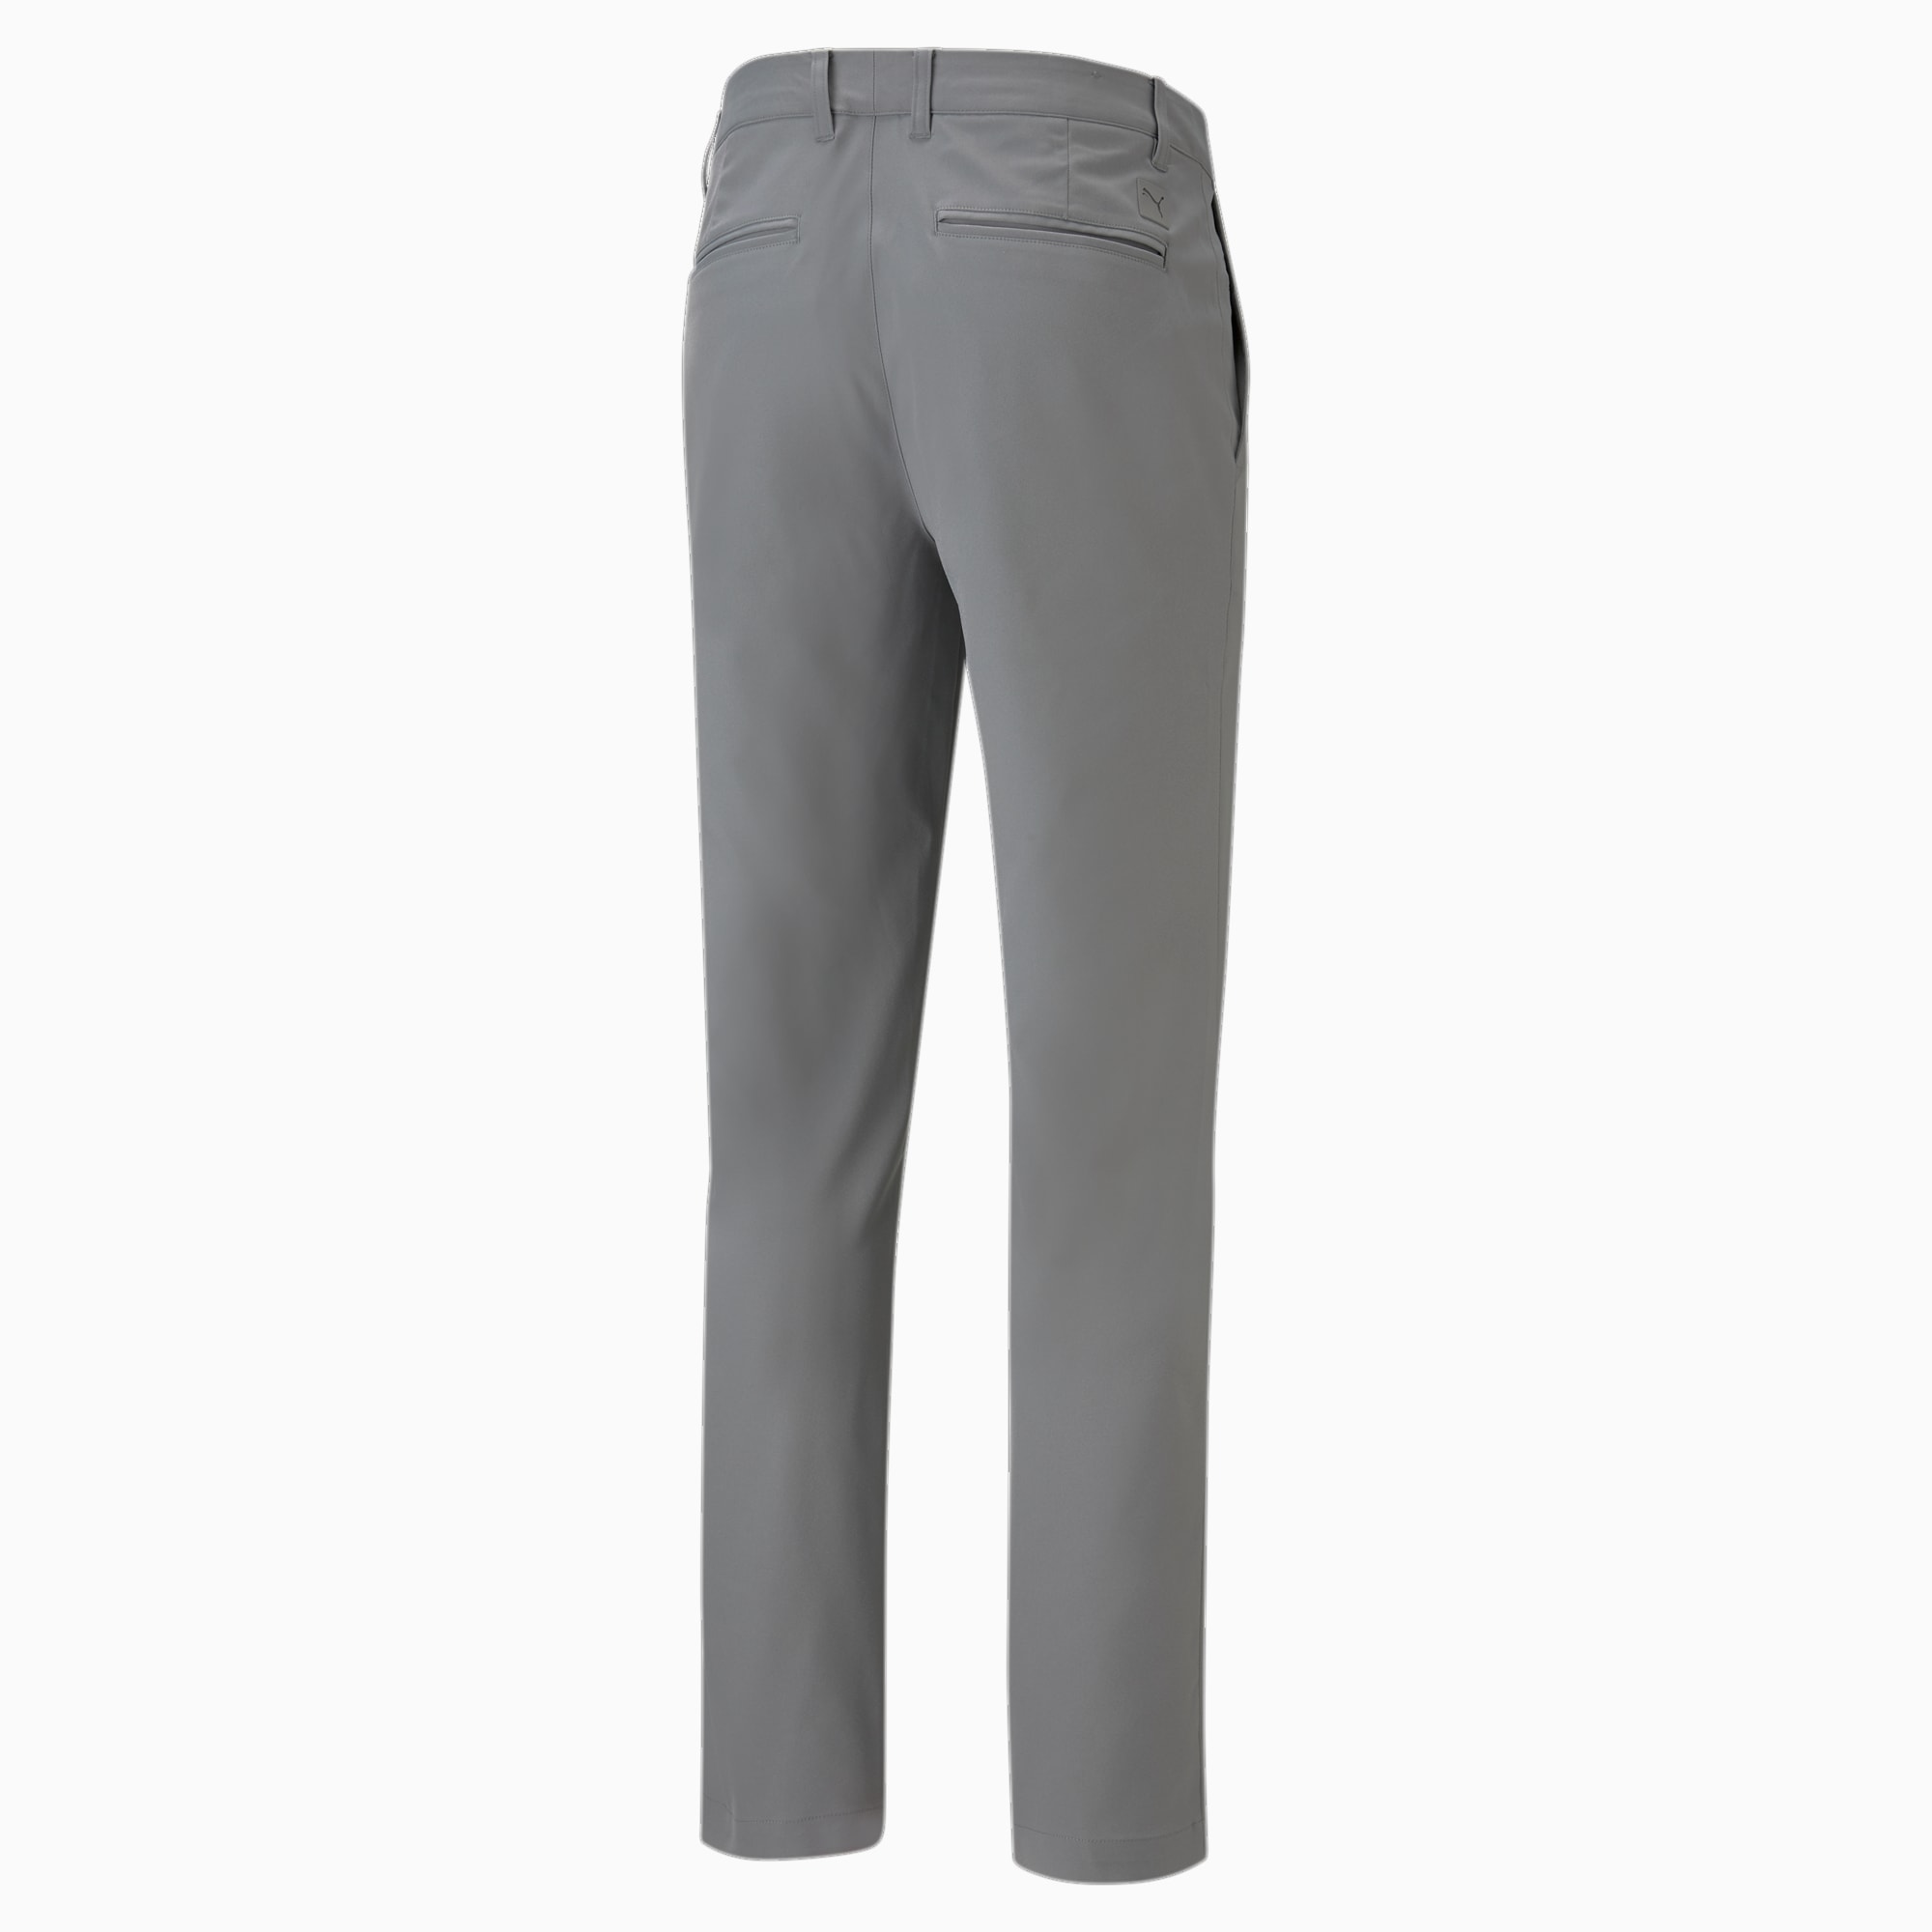 PUMA Dealer Tailored Golf Pants Men, Slate Sky, Size 38/30, Clothing